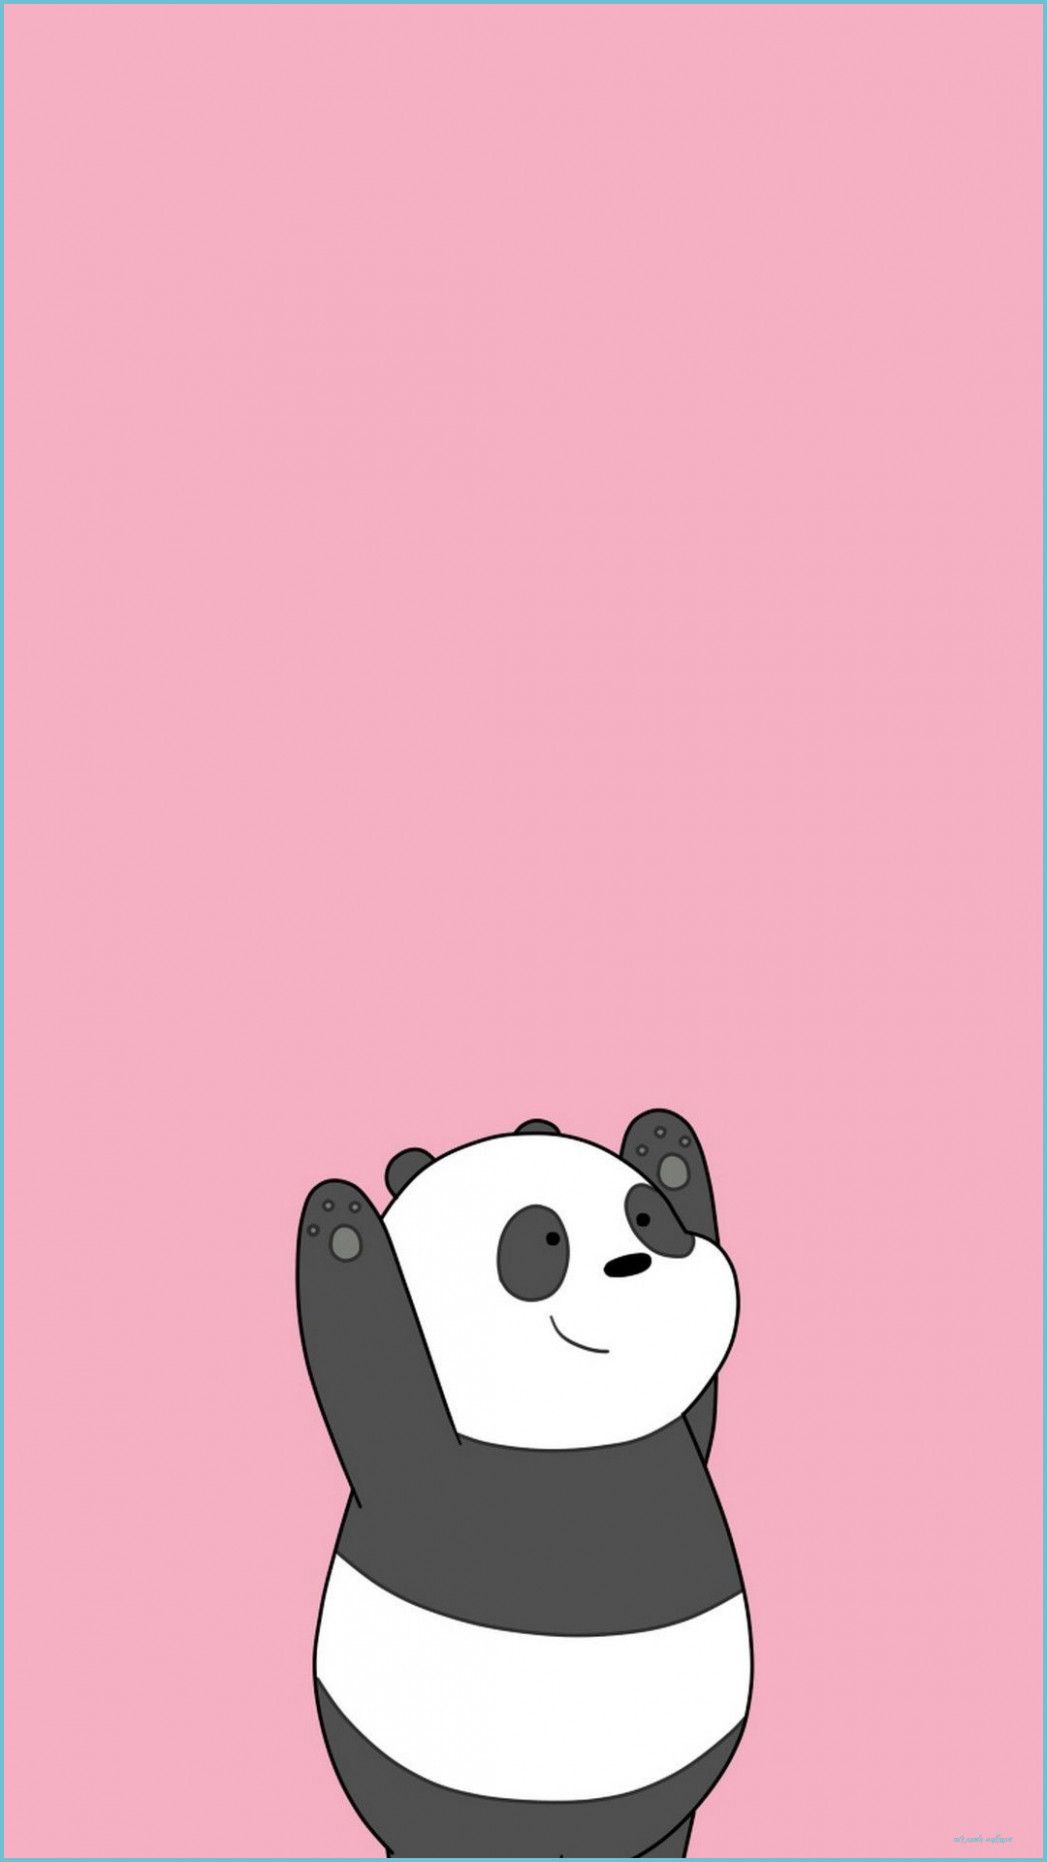 Panda Cartoon Wallpaper (Picture) Panda Wallpaper